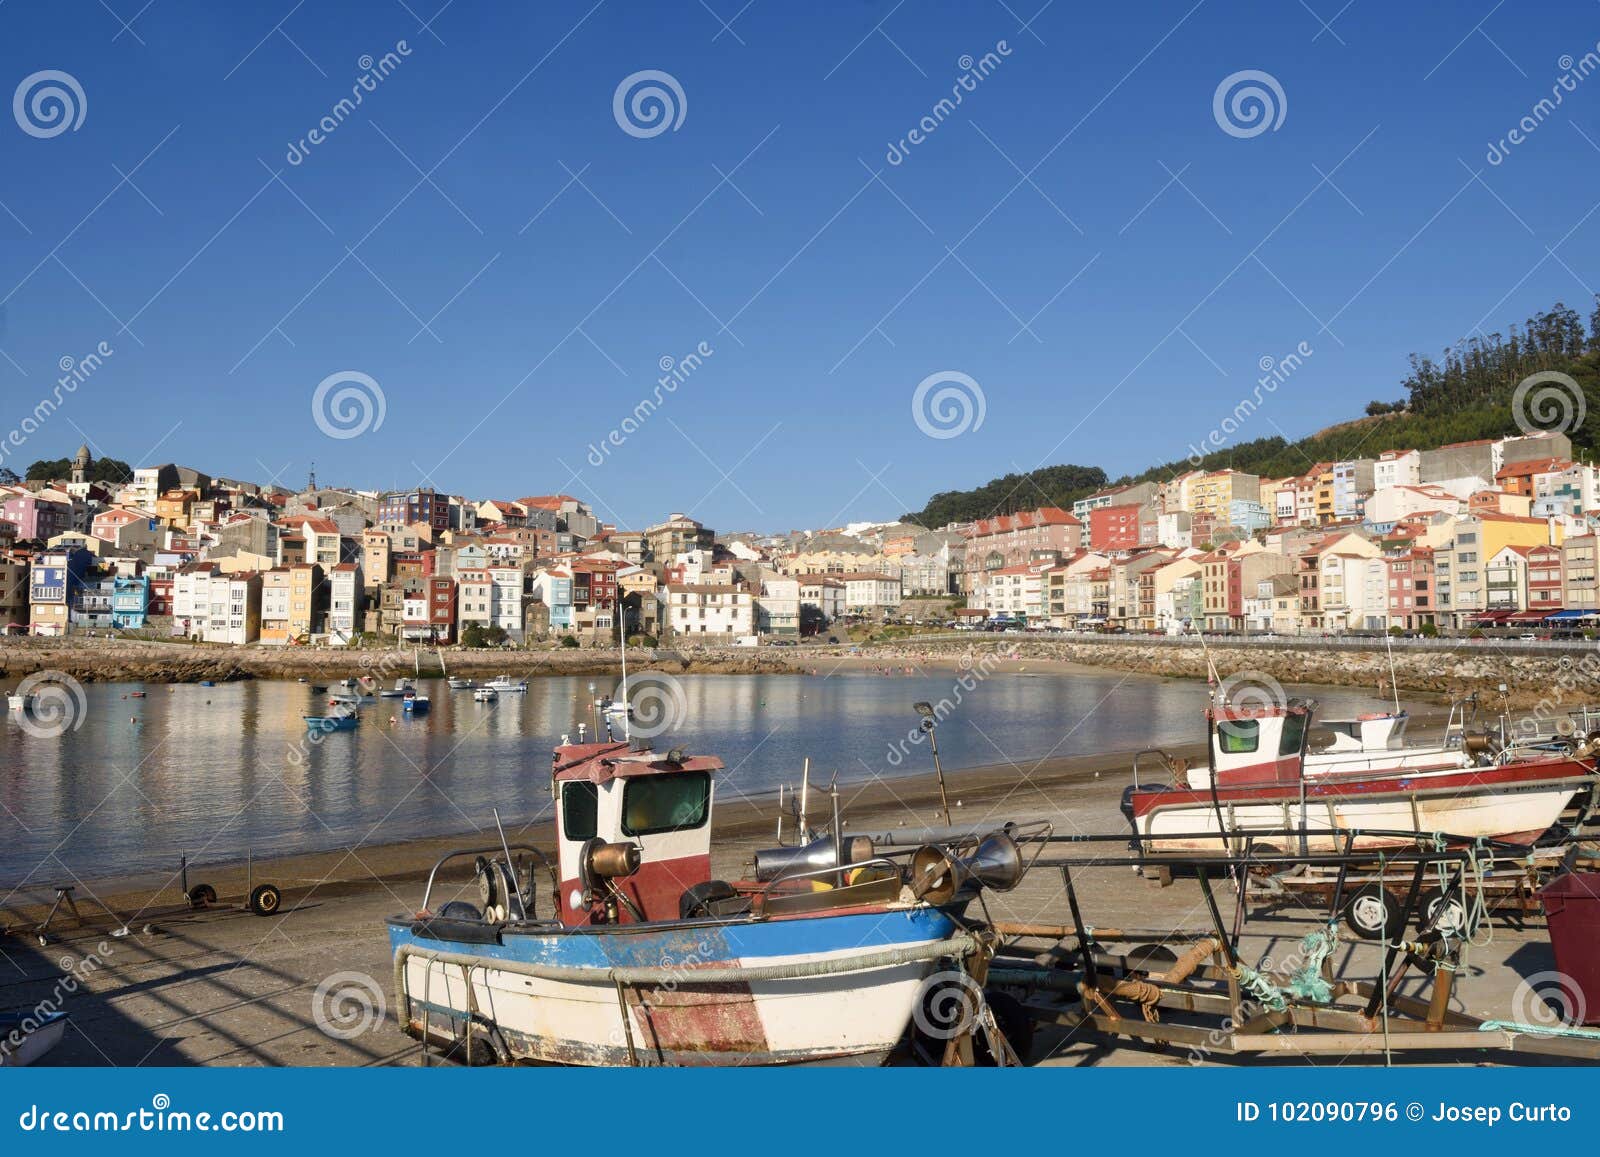 view of the fishing village of la guardia, pontevedra province,